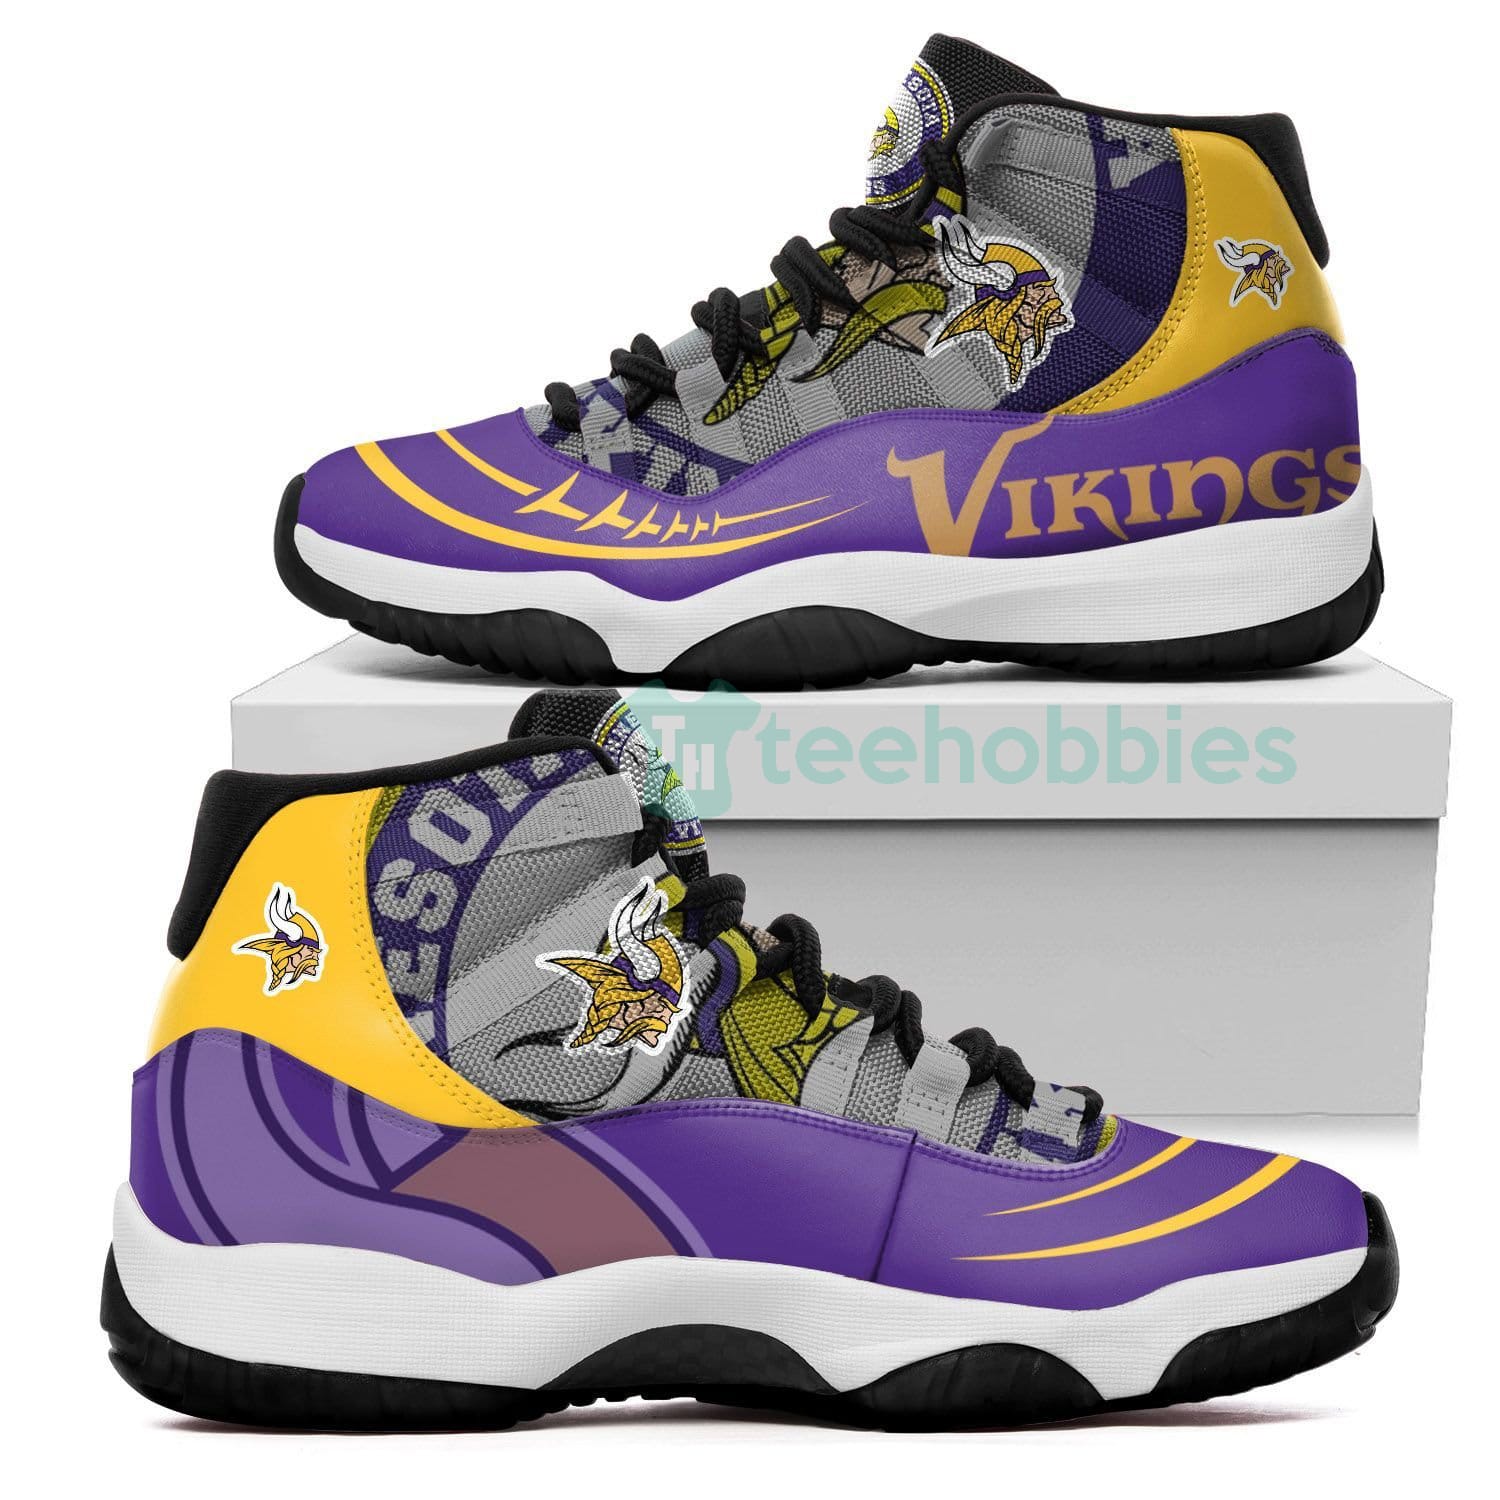 Minnesota Vikings New Air Jordan 11 Shoes For